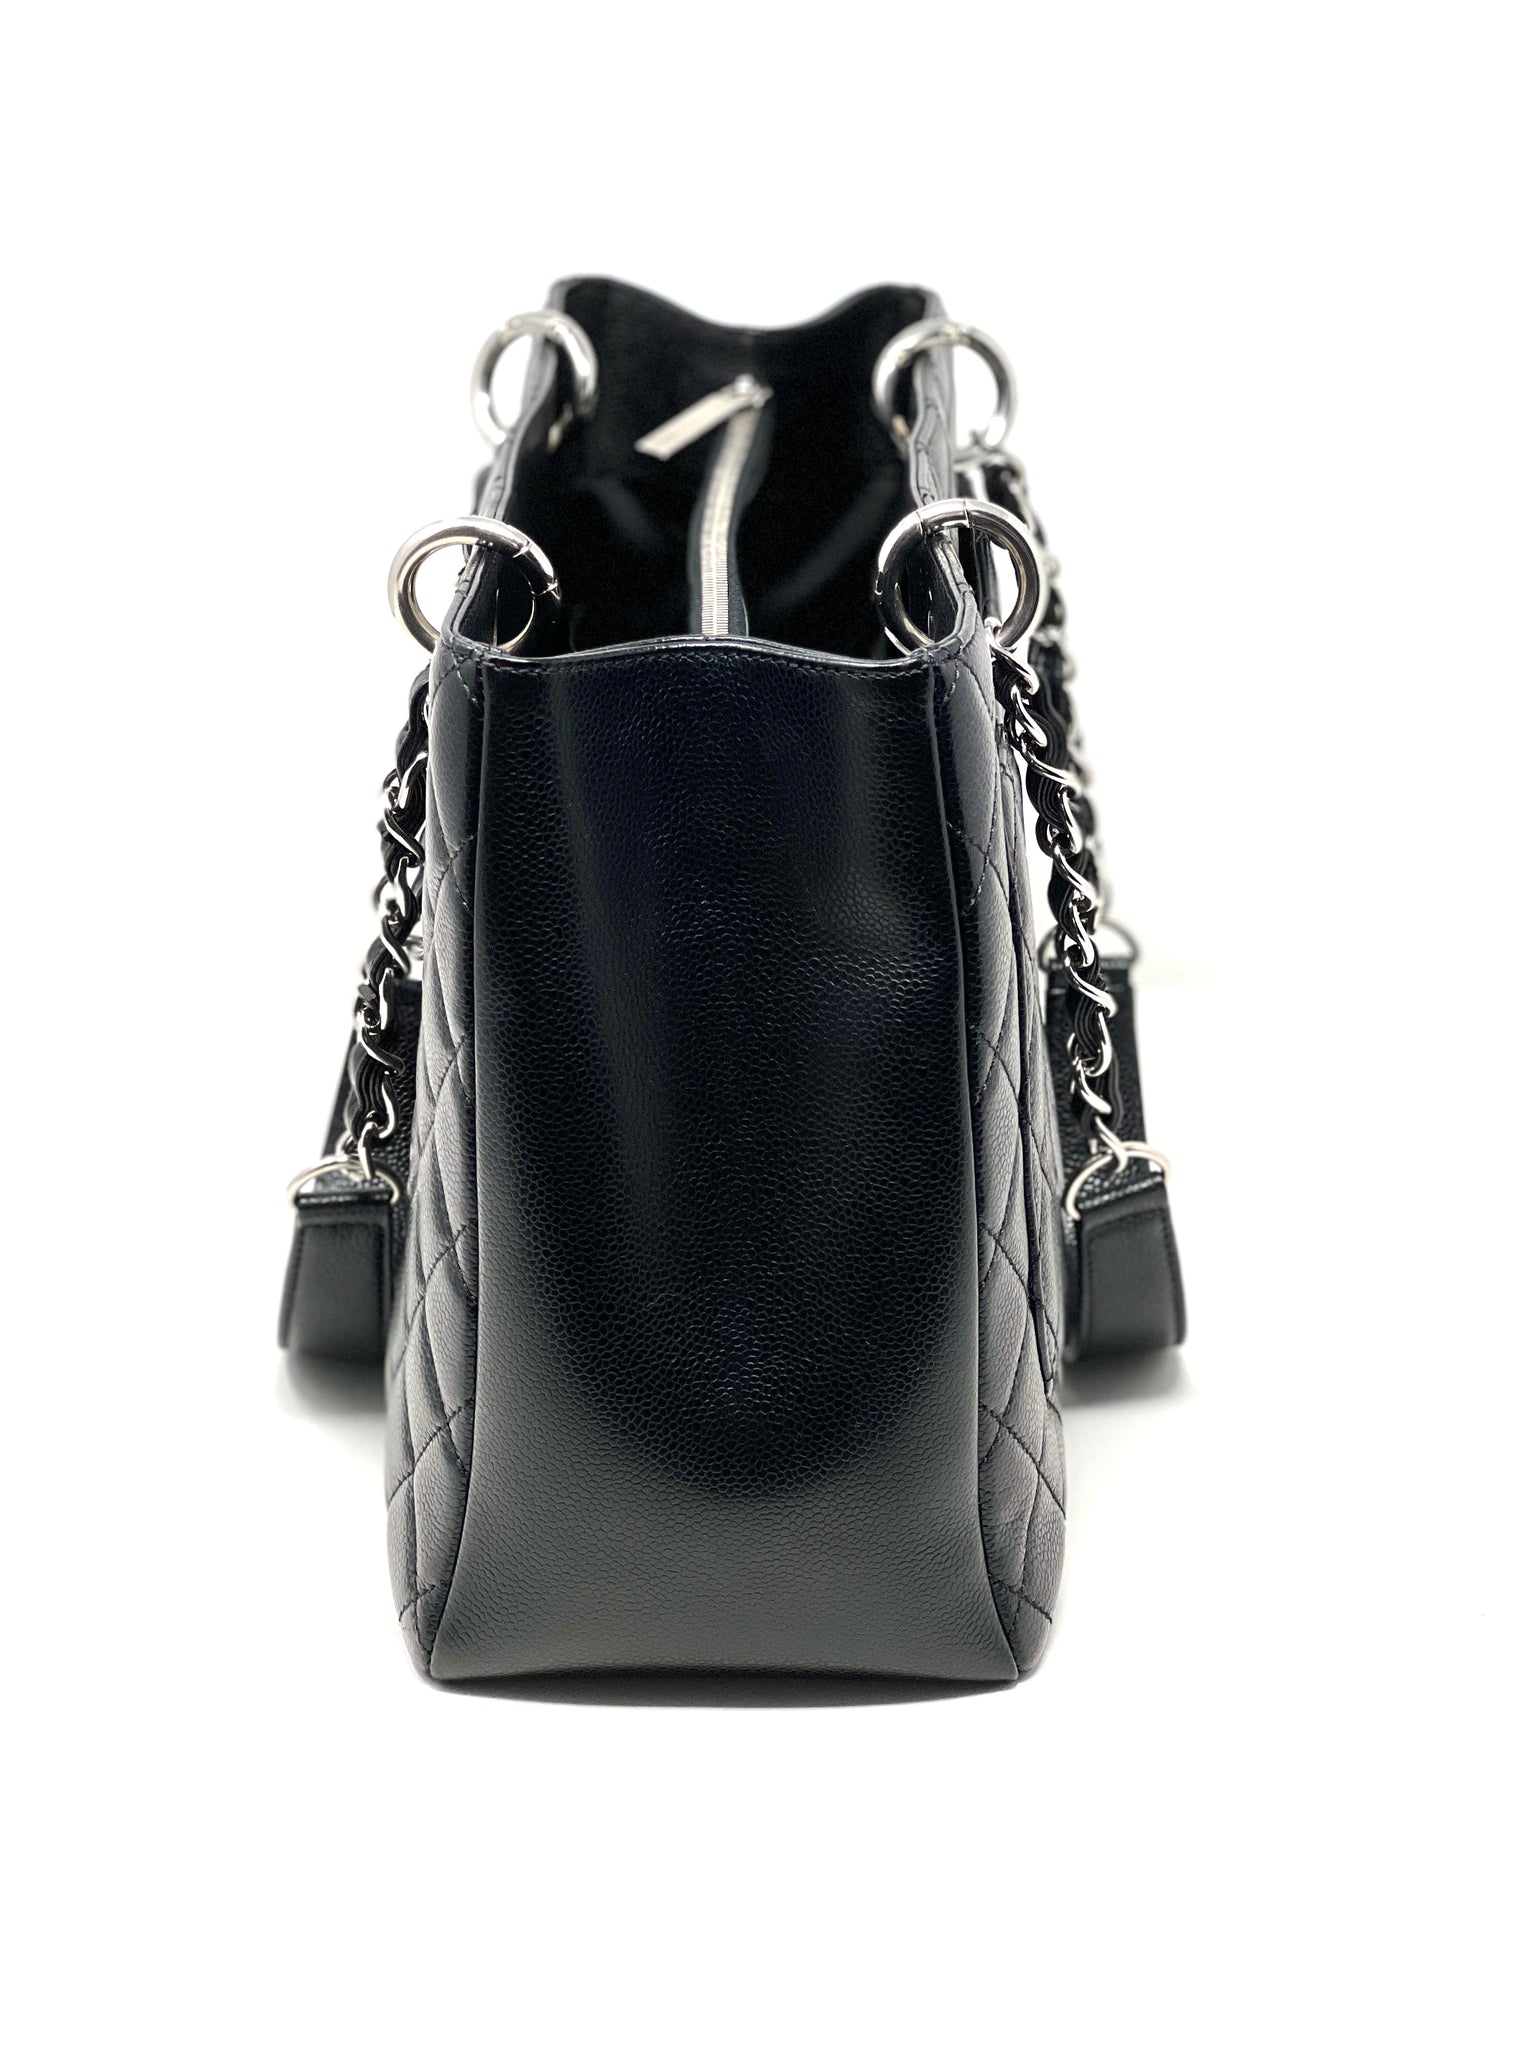 CHANEL, Bags, Chanel Caviar Gst Tote Shopping Bag Black